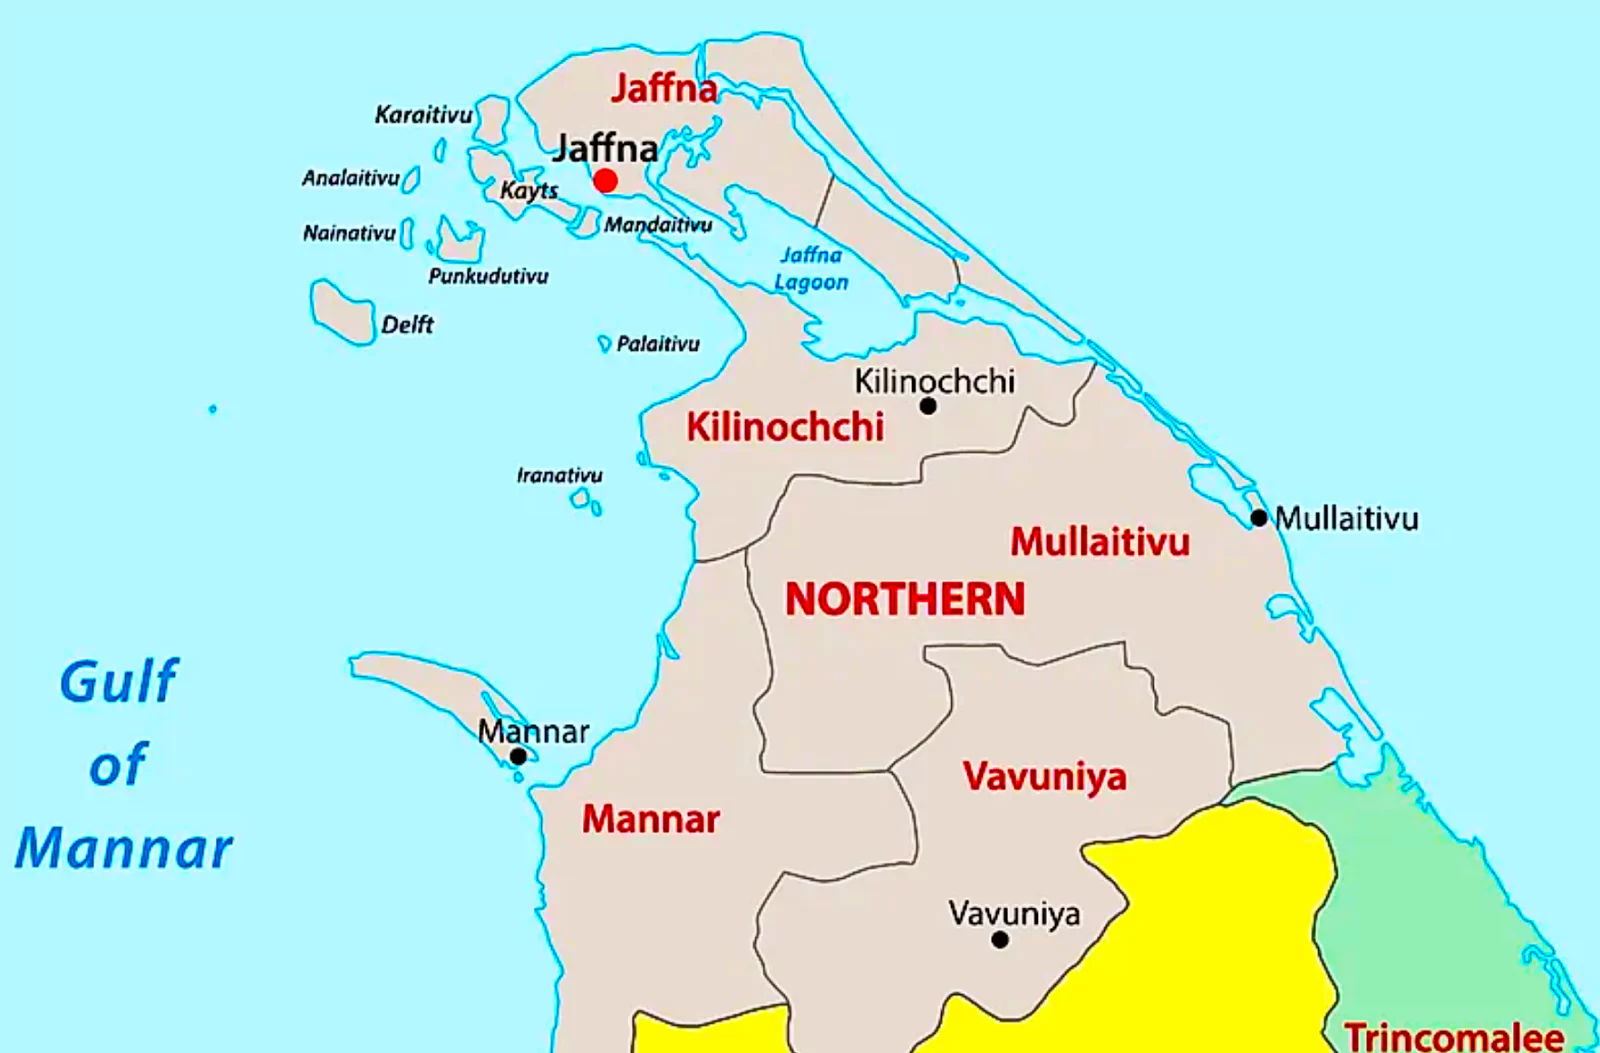 Nainativu Island